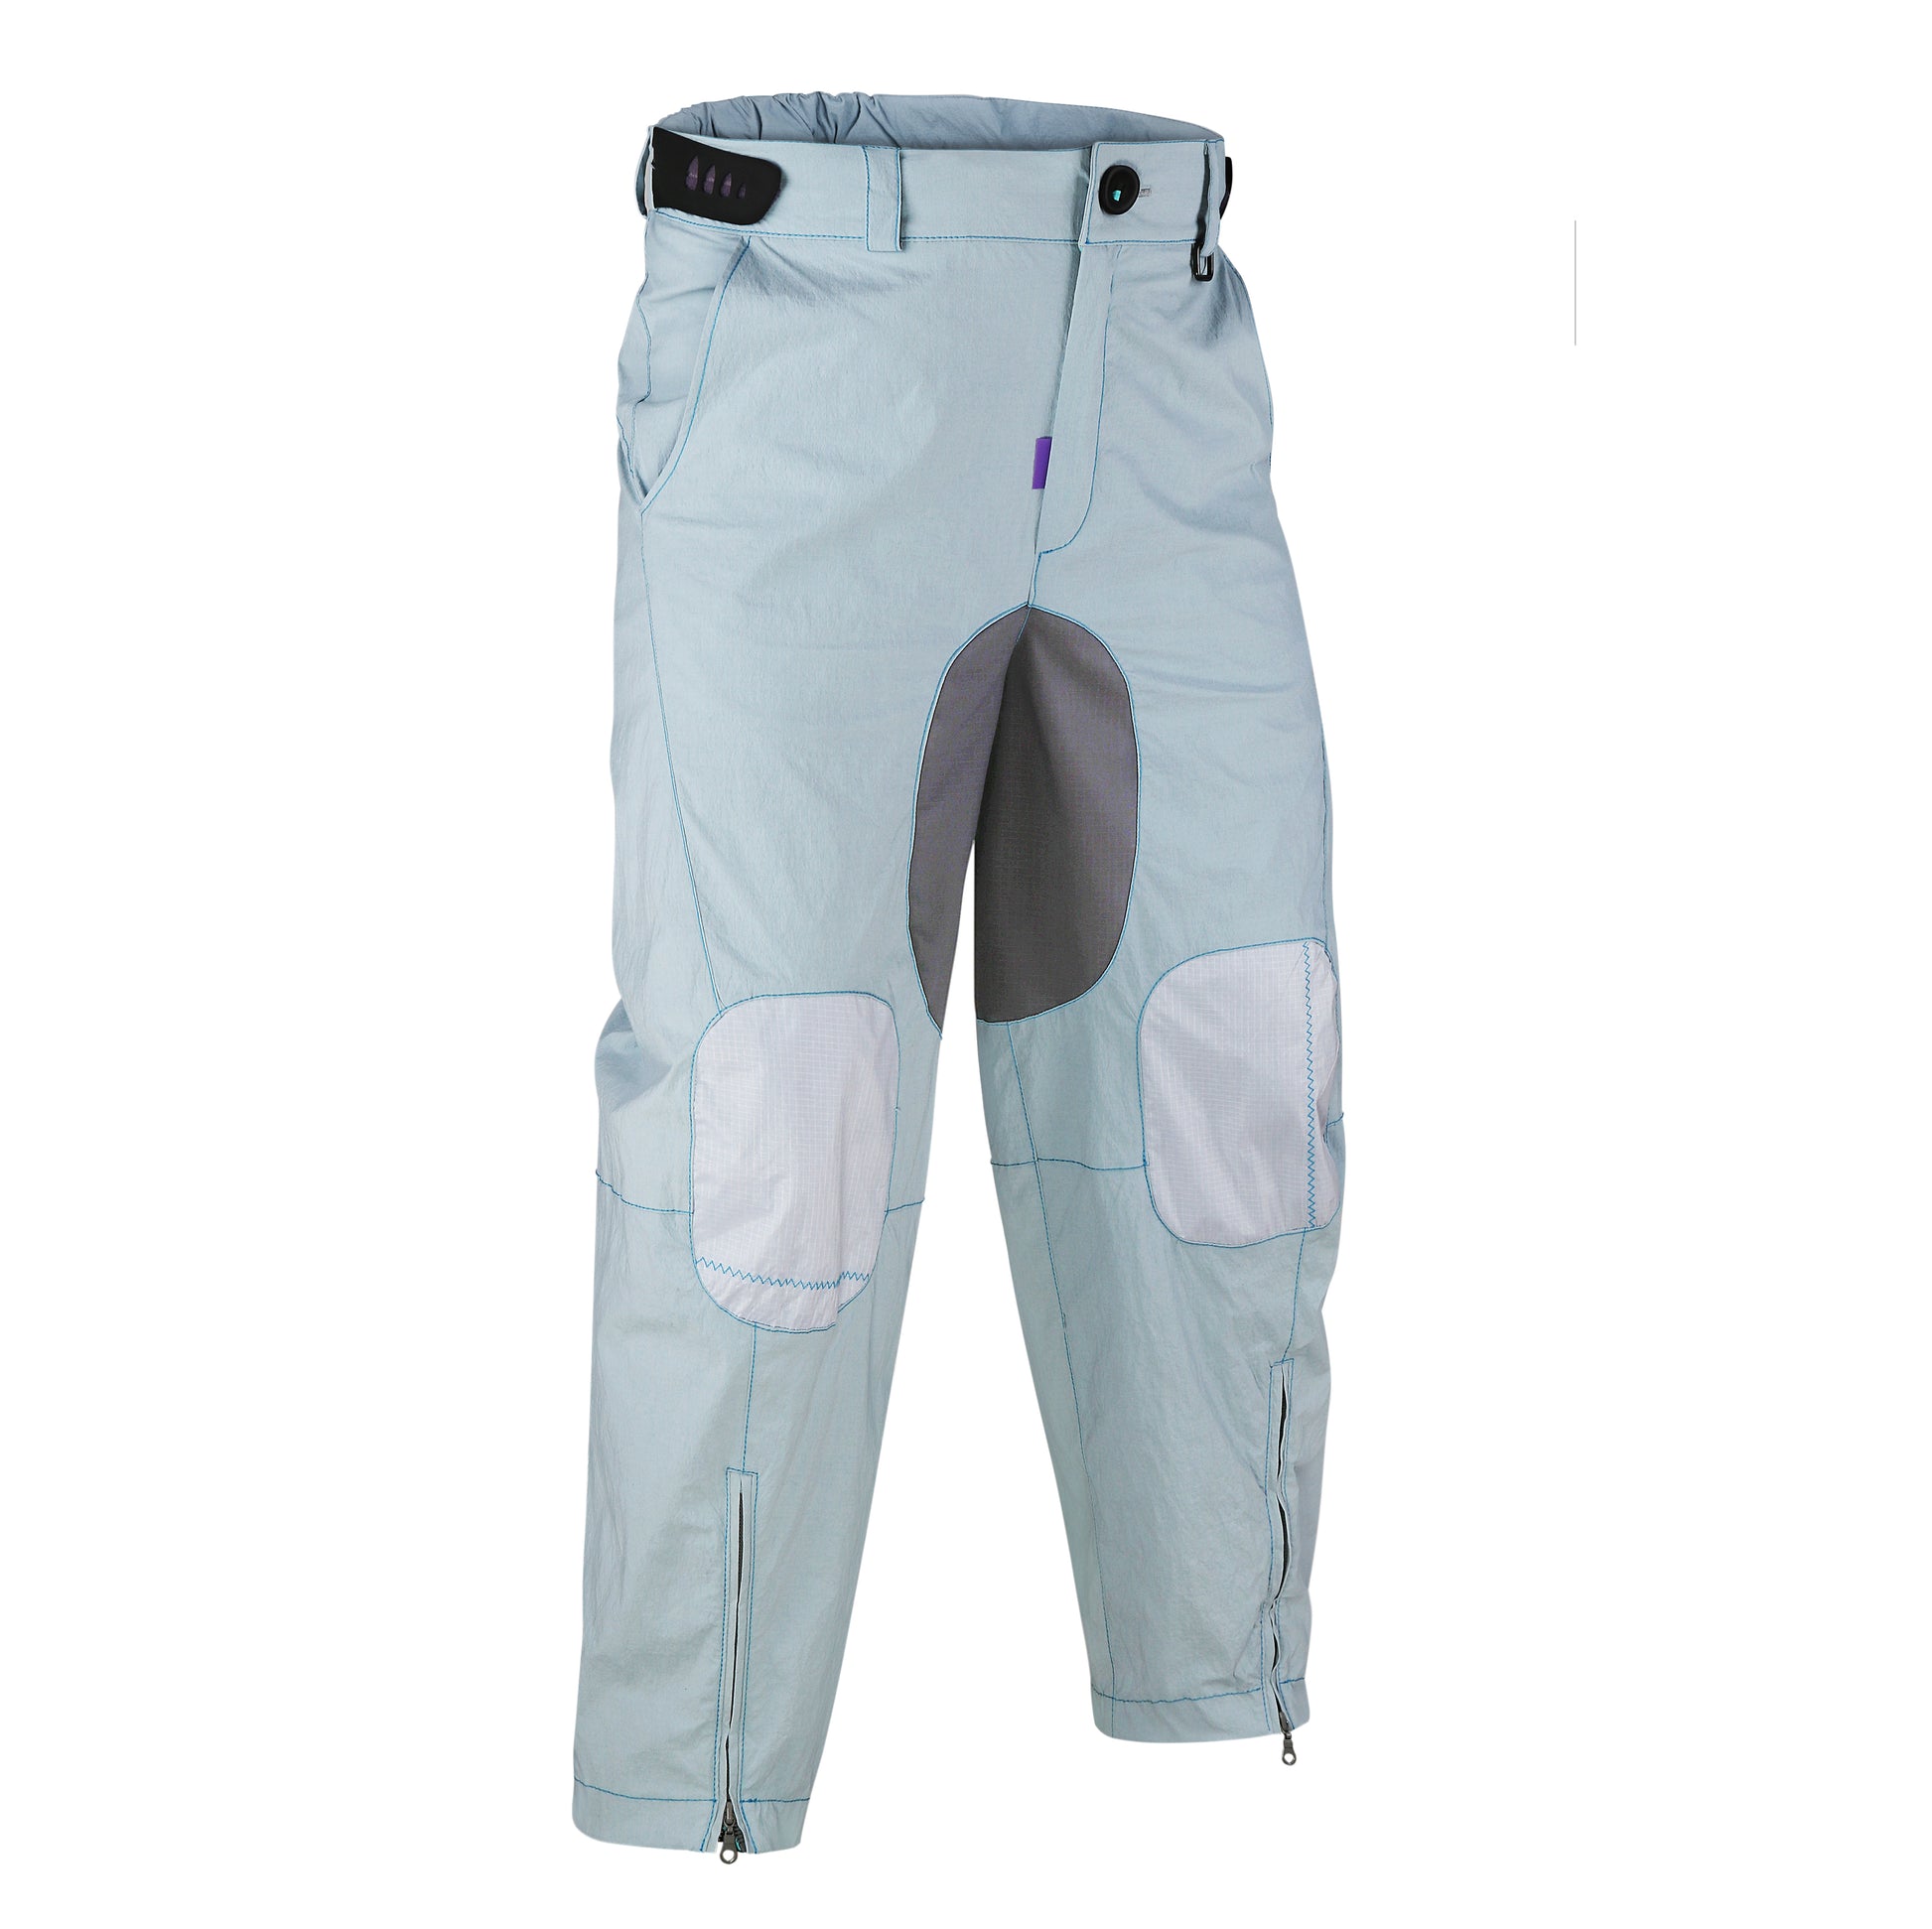 Waterproof casual pants for men from REwind. Made in Ukraine